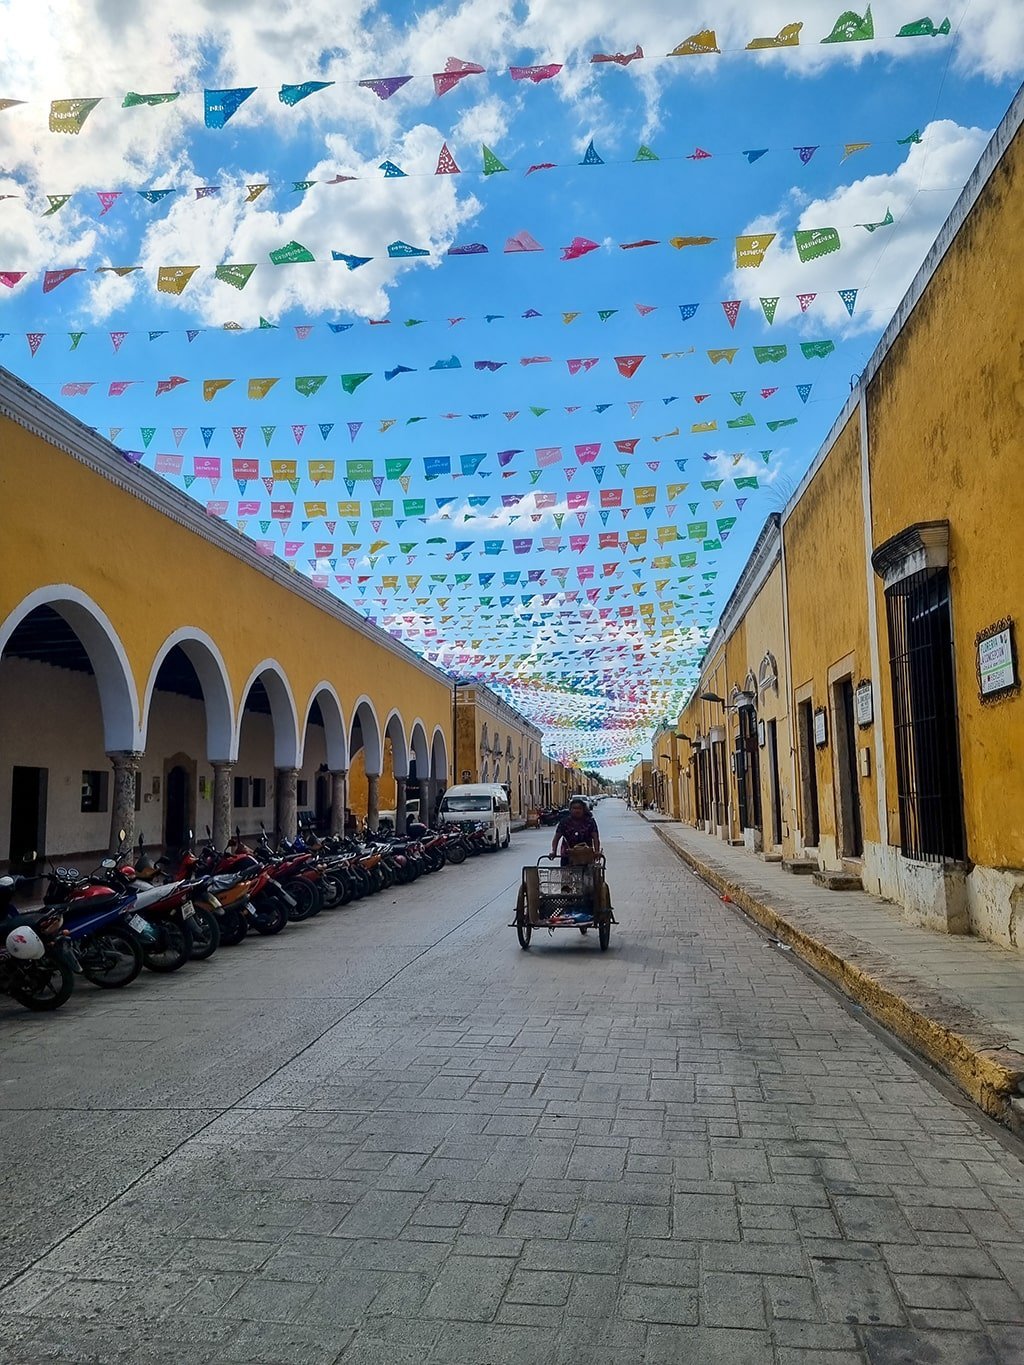 Straat met vlaggetjes in Mexico